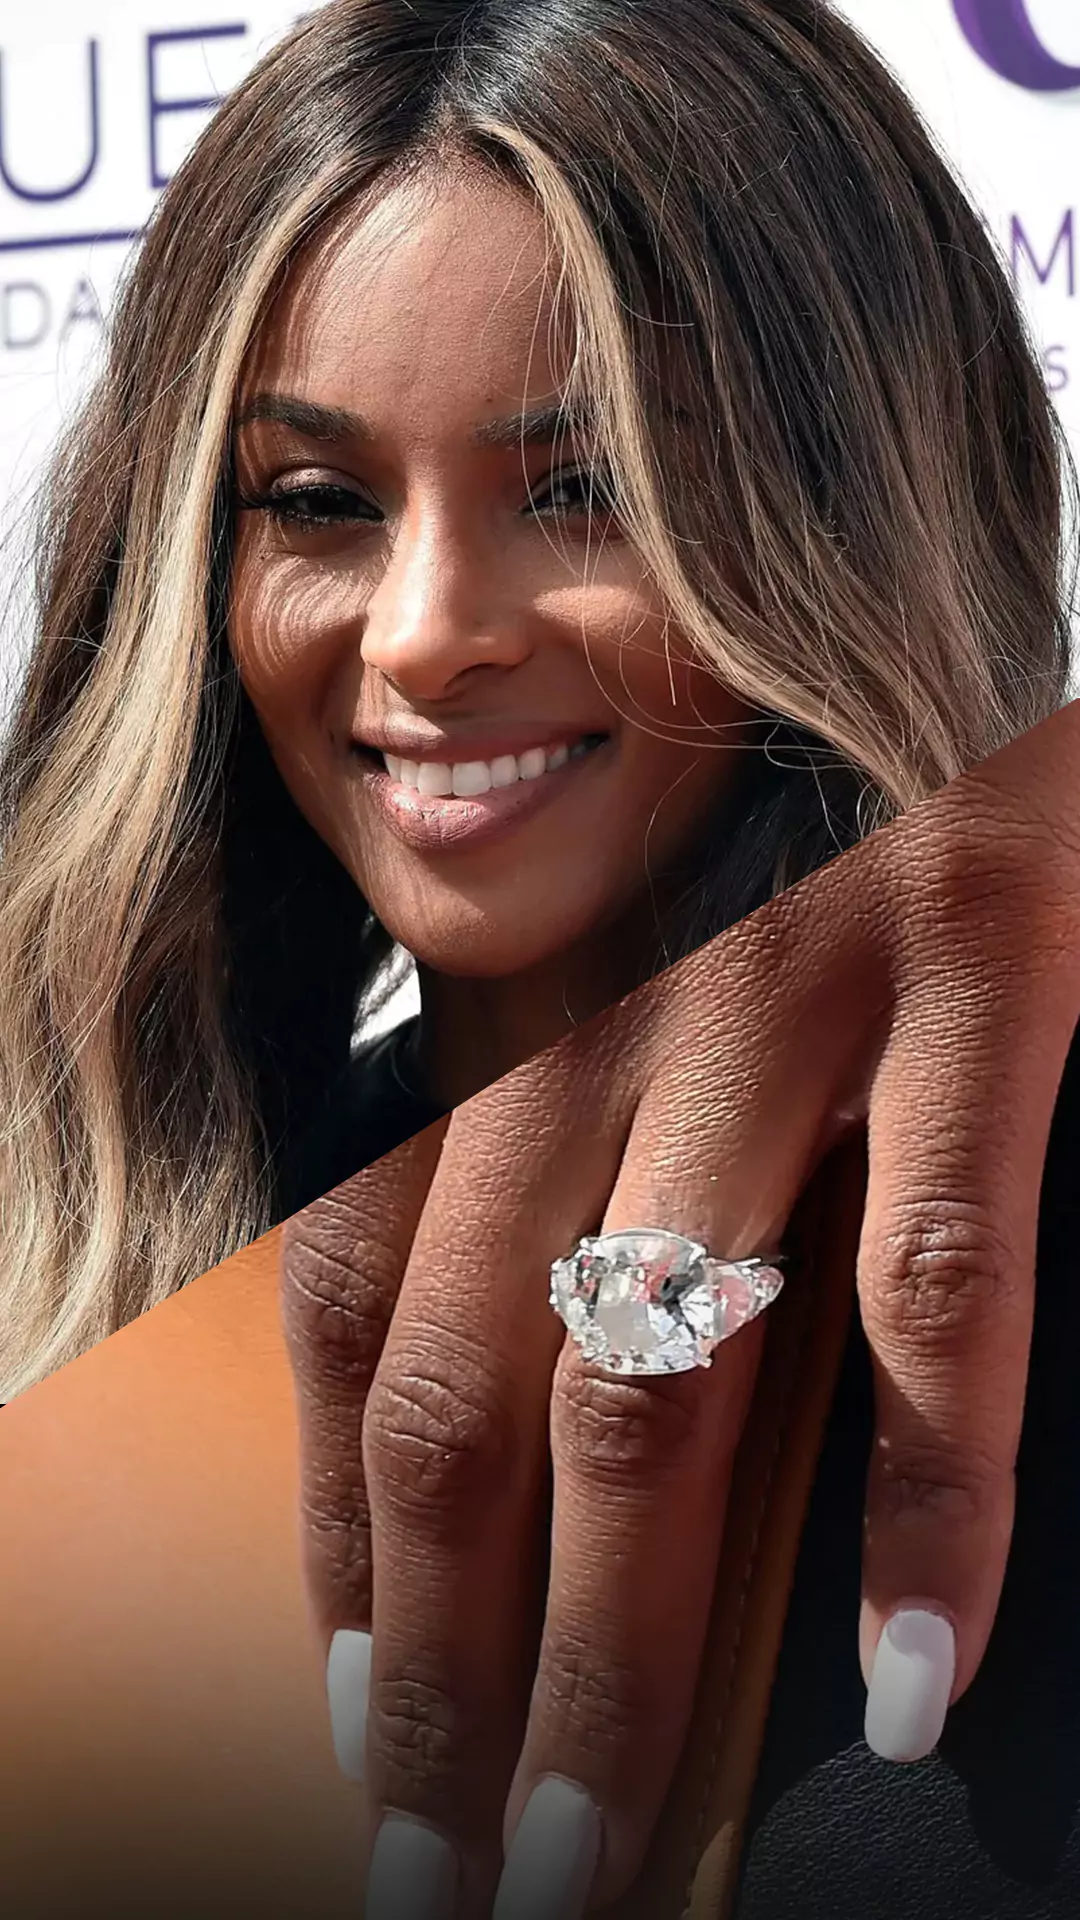 Ciara gets engaged to Future